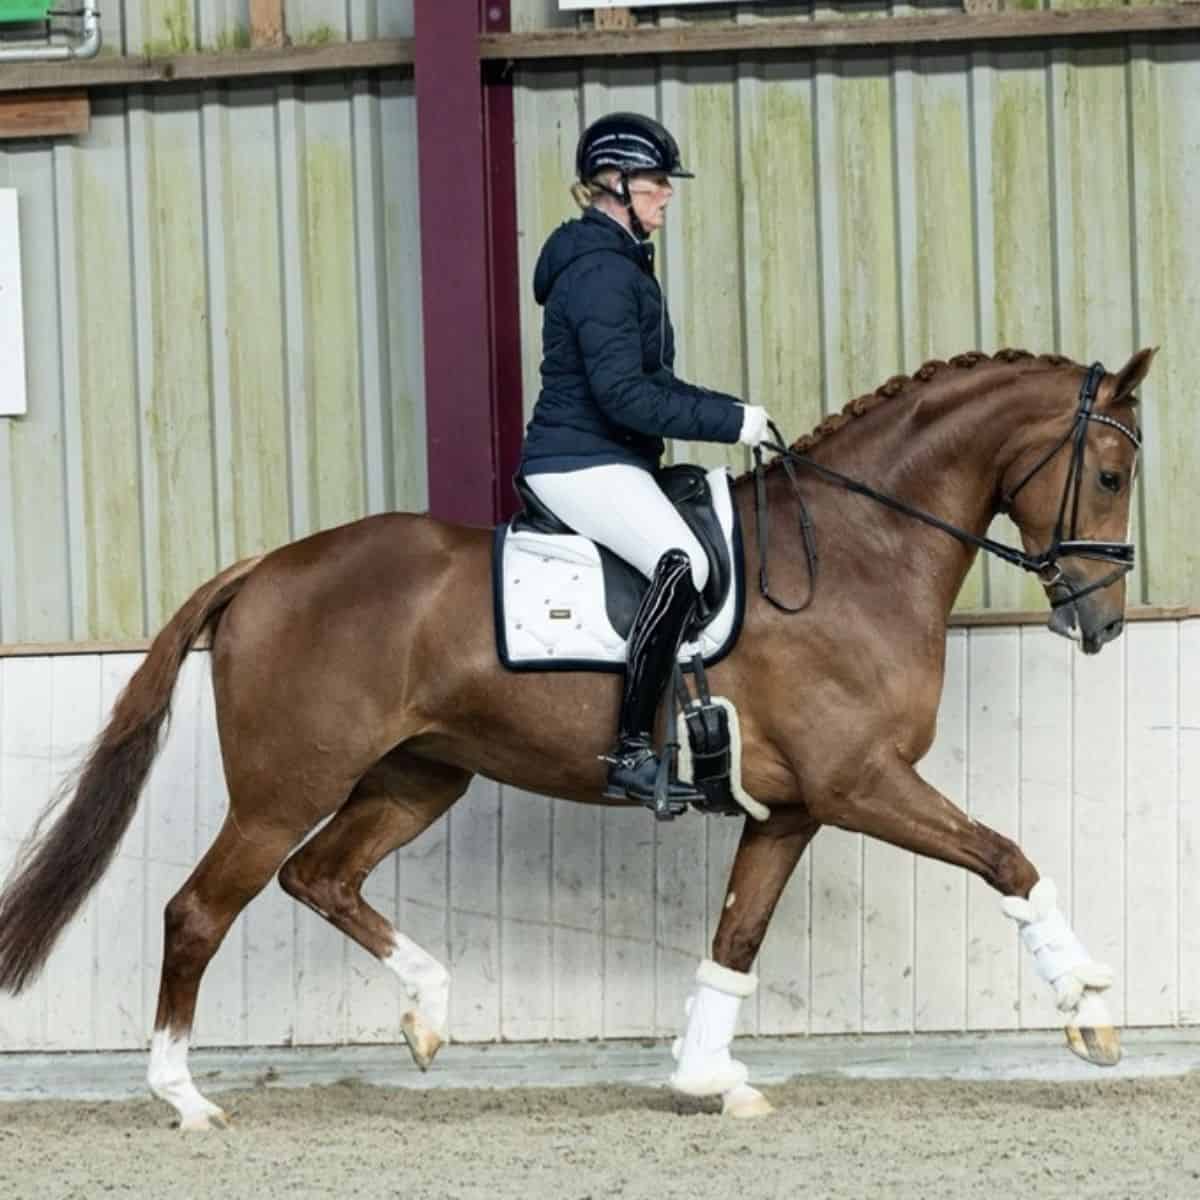 A woman rides a brown Dutch Warmblood horse in a training hall.